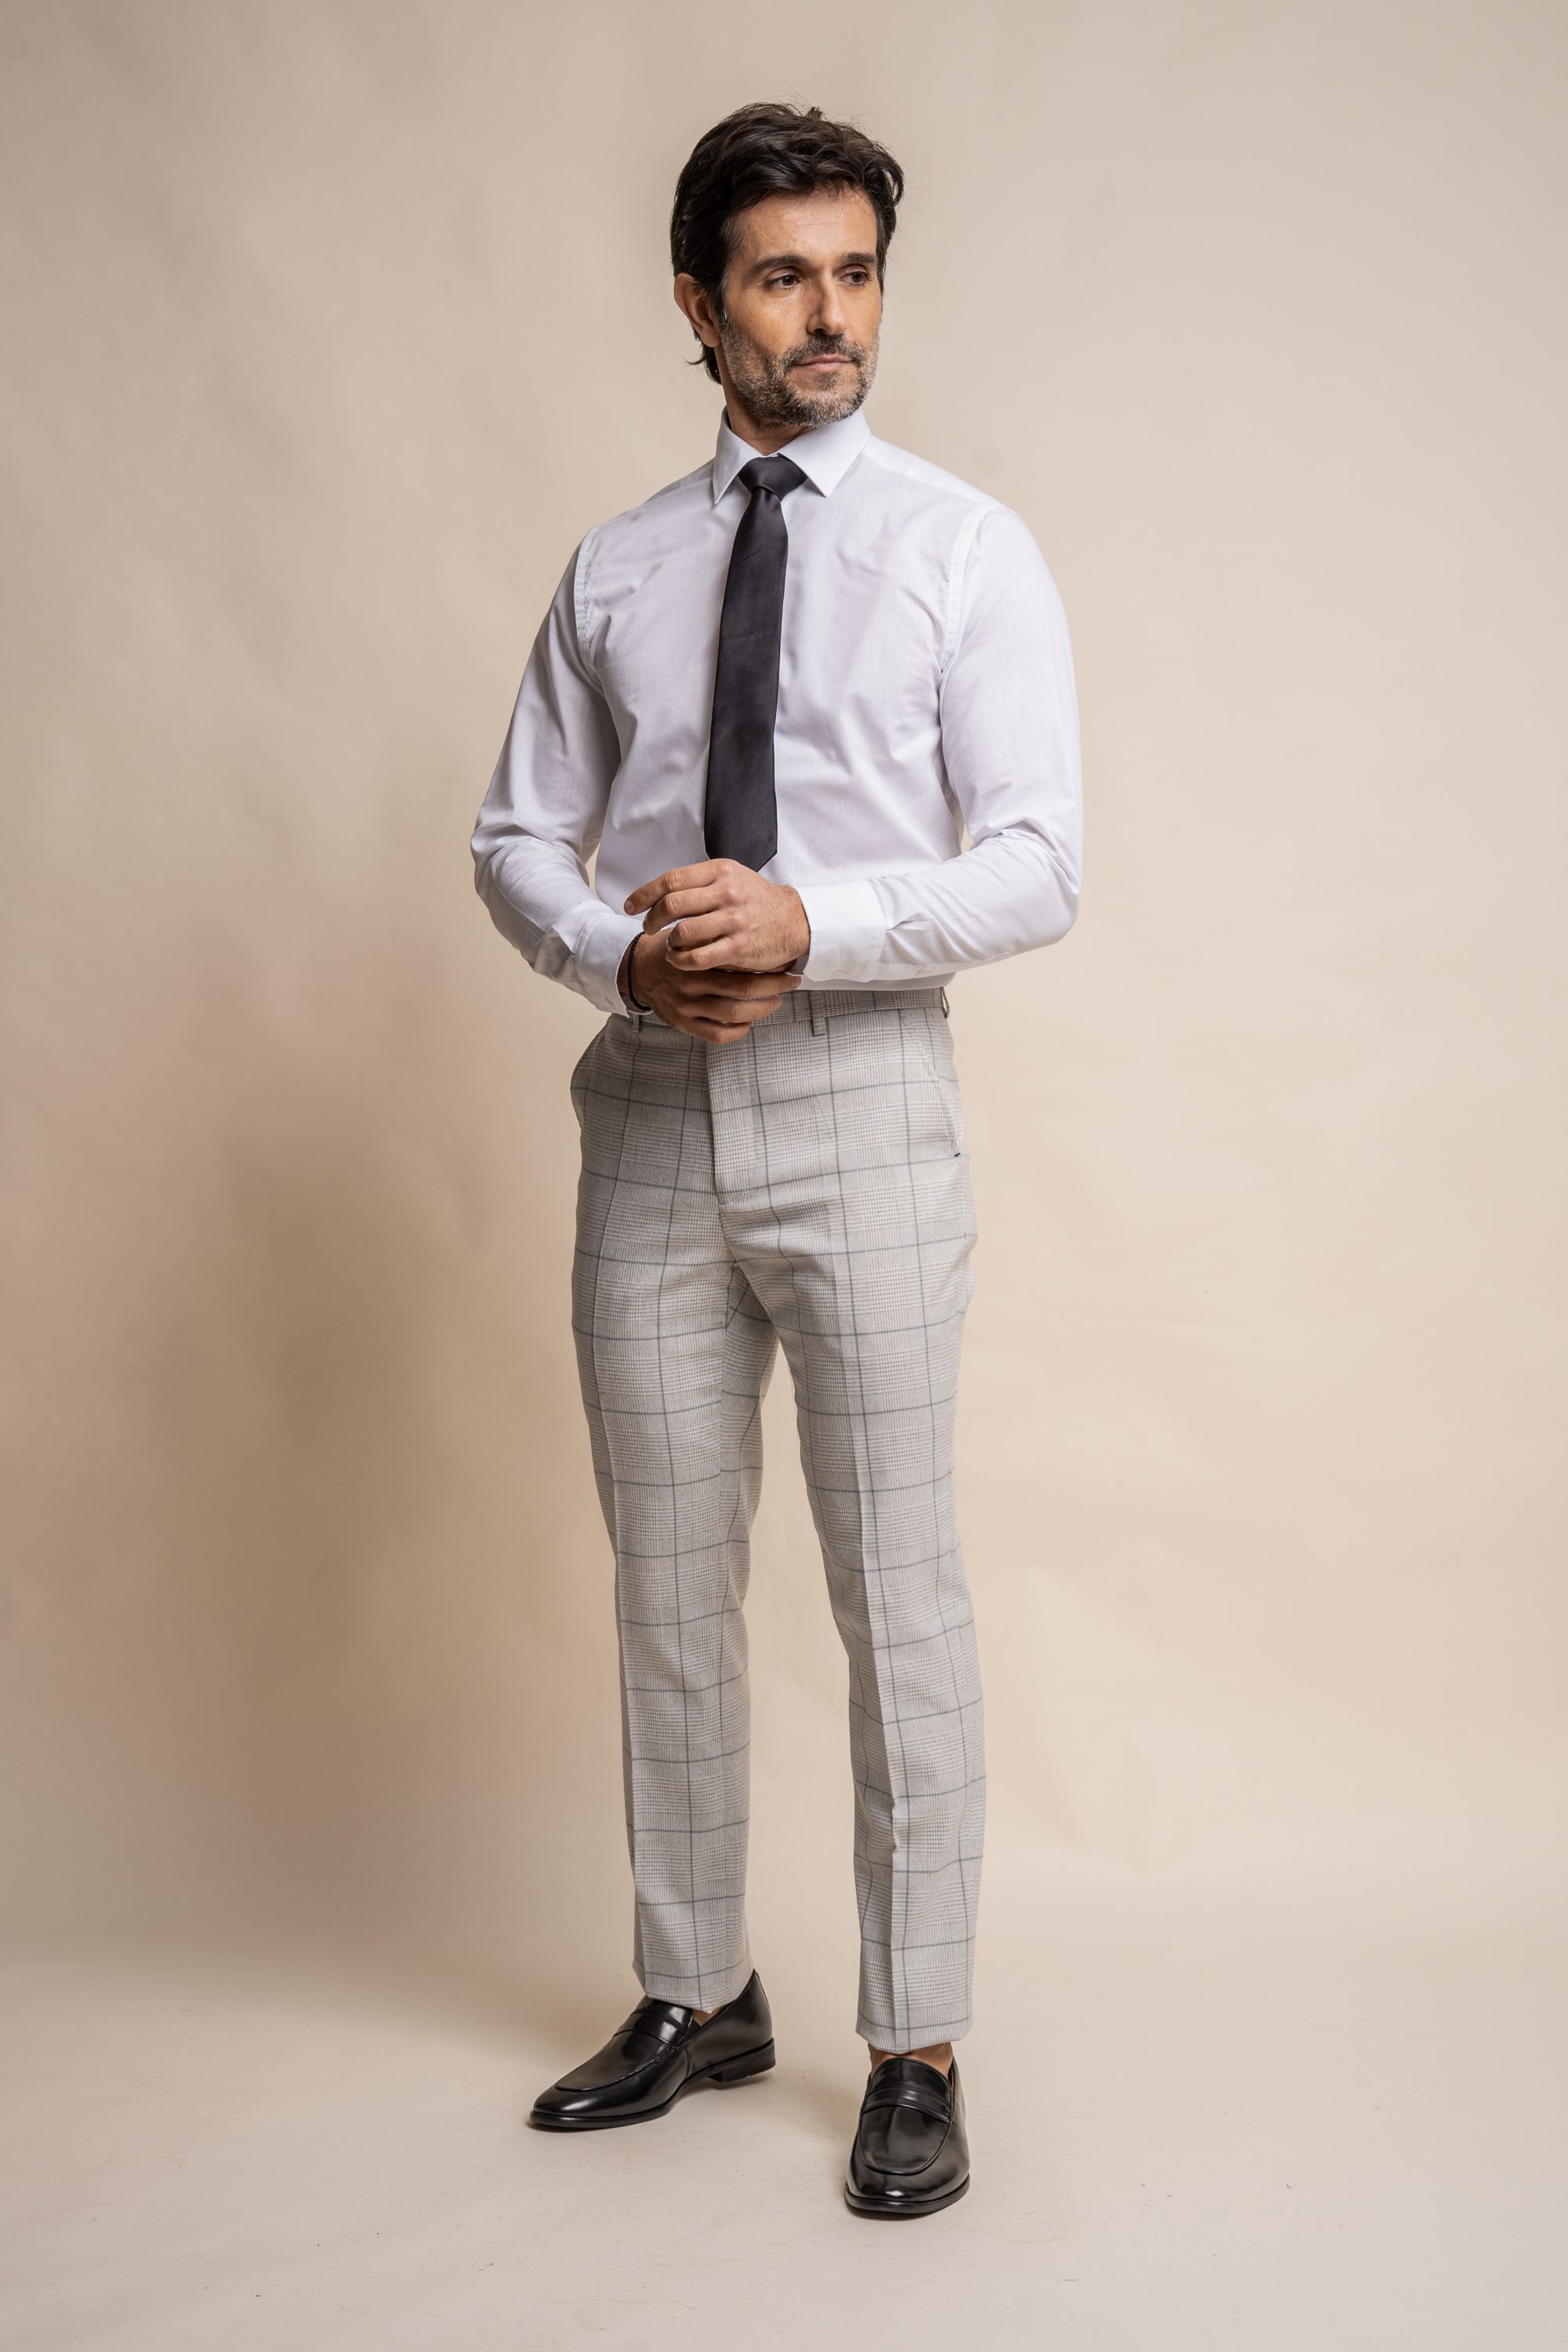 Men's Retro Check Grey Trousers - RADIKA - Light Grey